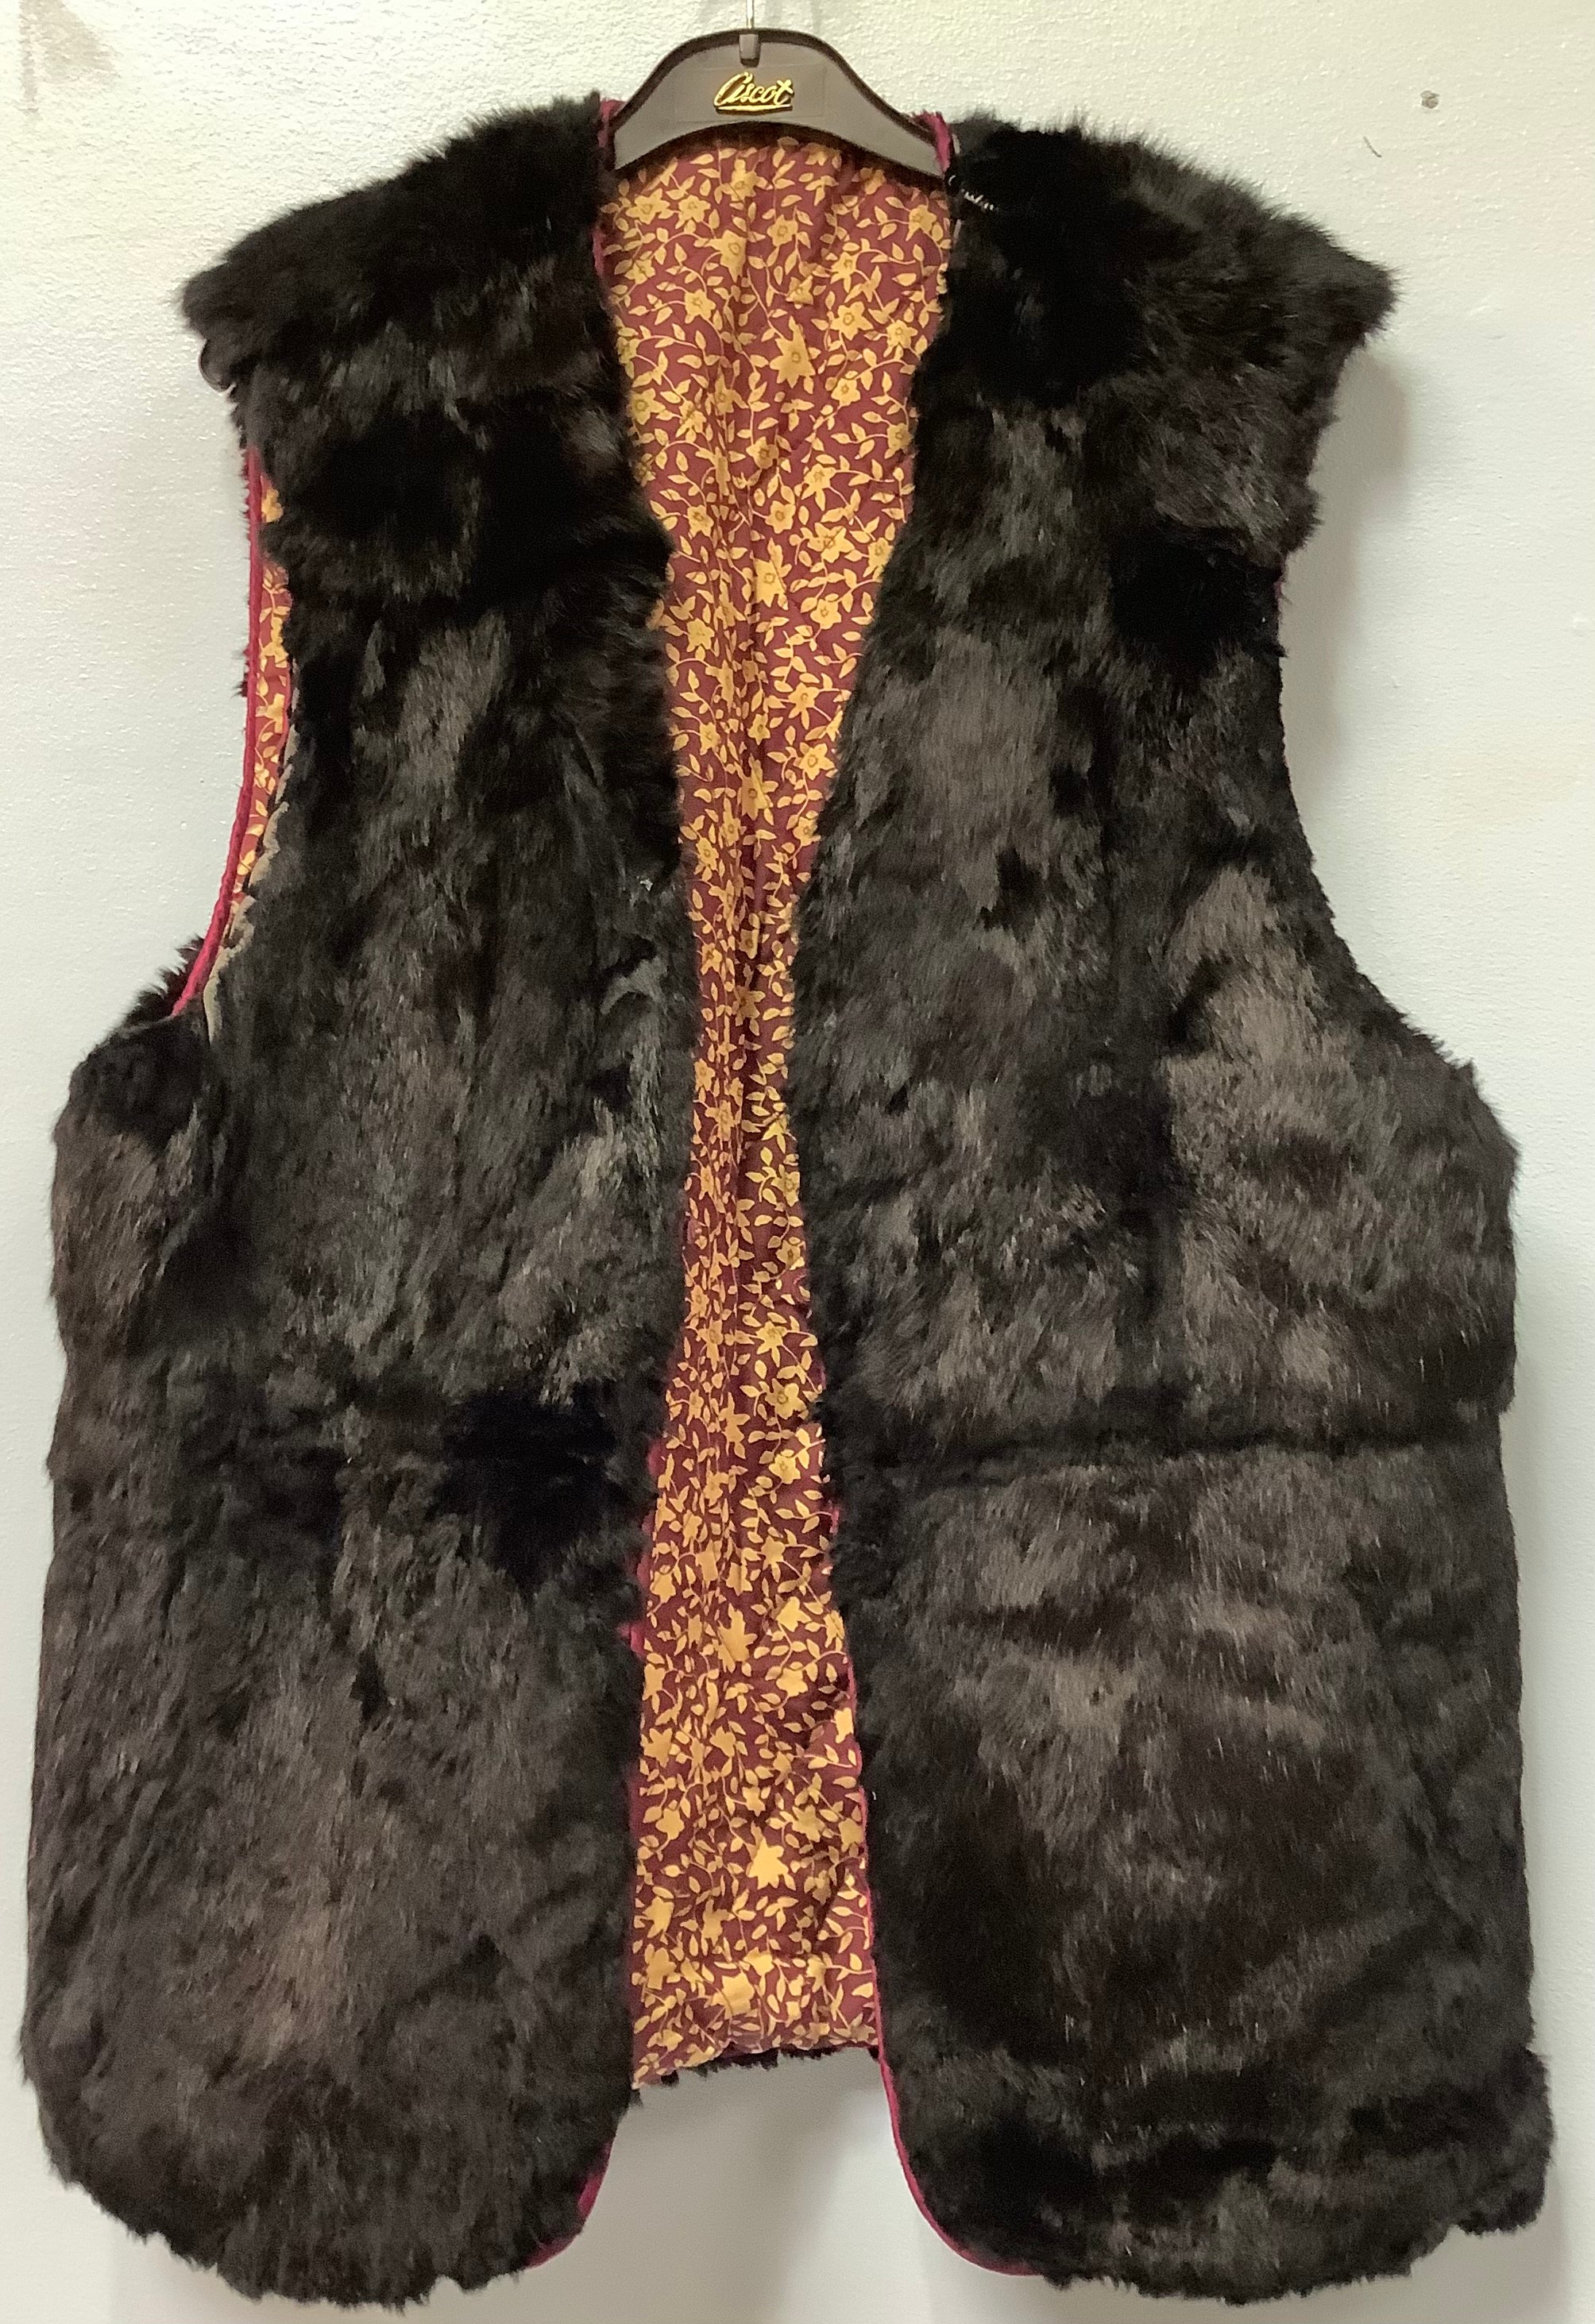 A three-quarter length light brown mink fur coat, probably from Hong Kong, a lady’s three-quarter